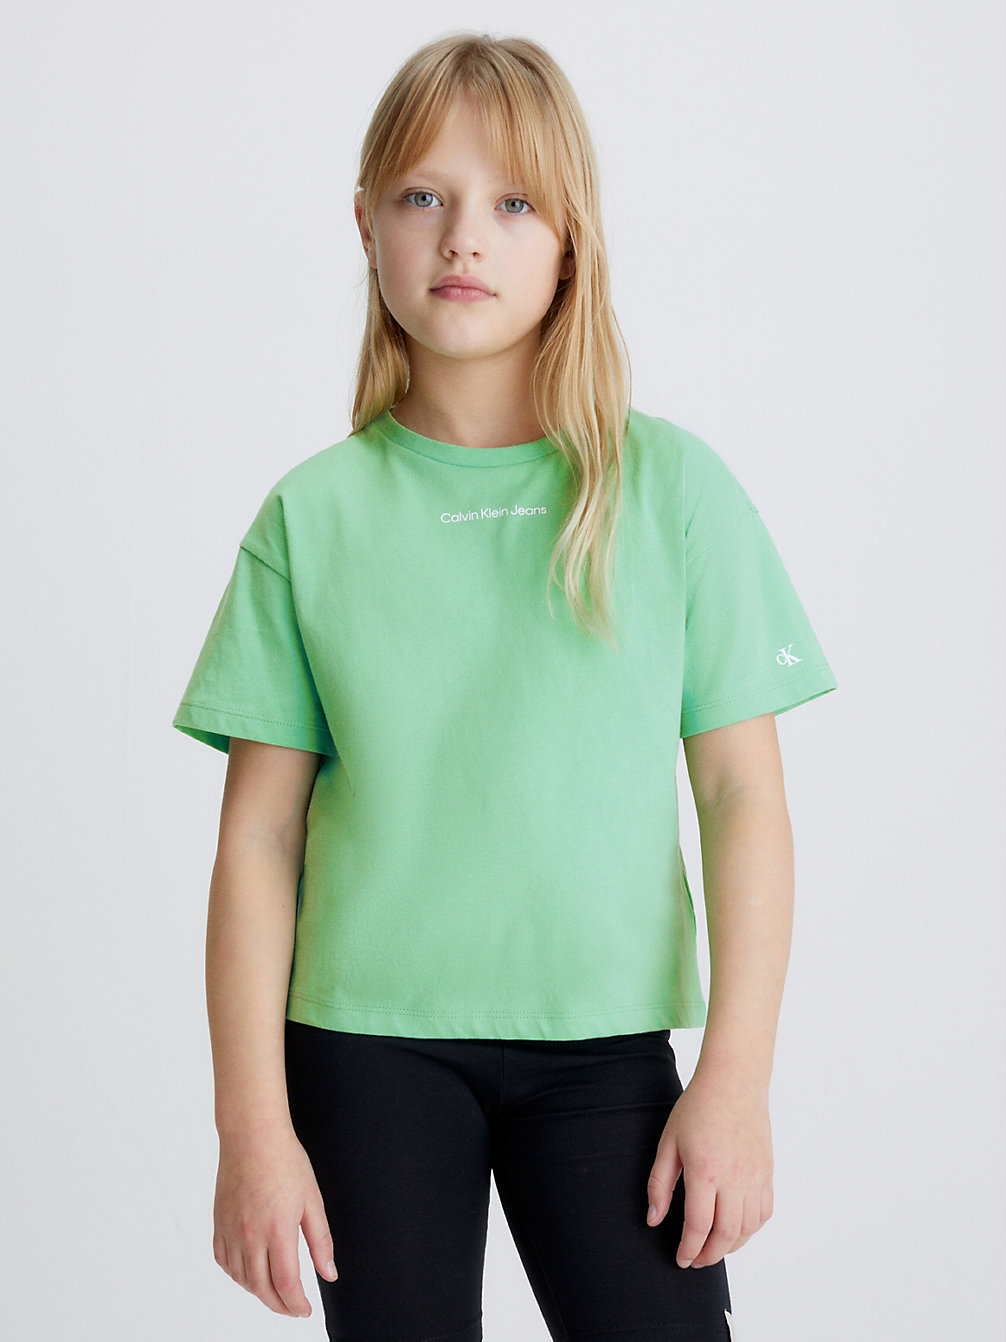 NEPTUNES WAVE Organic Cotton Boxy T-Shirt undefined girls Calvin Klein